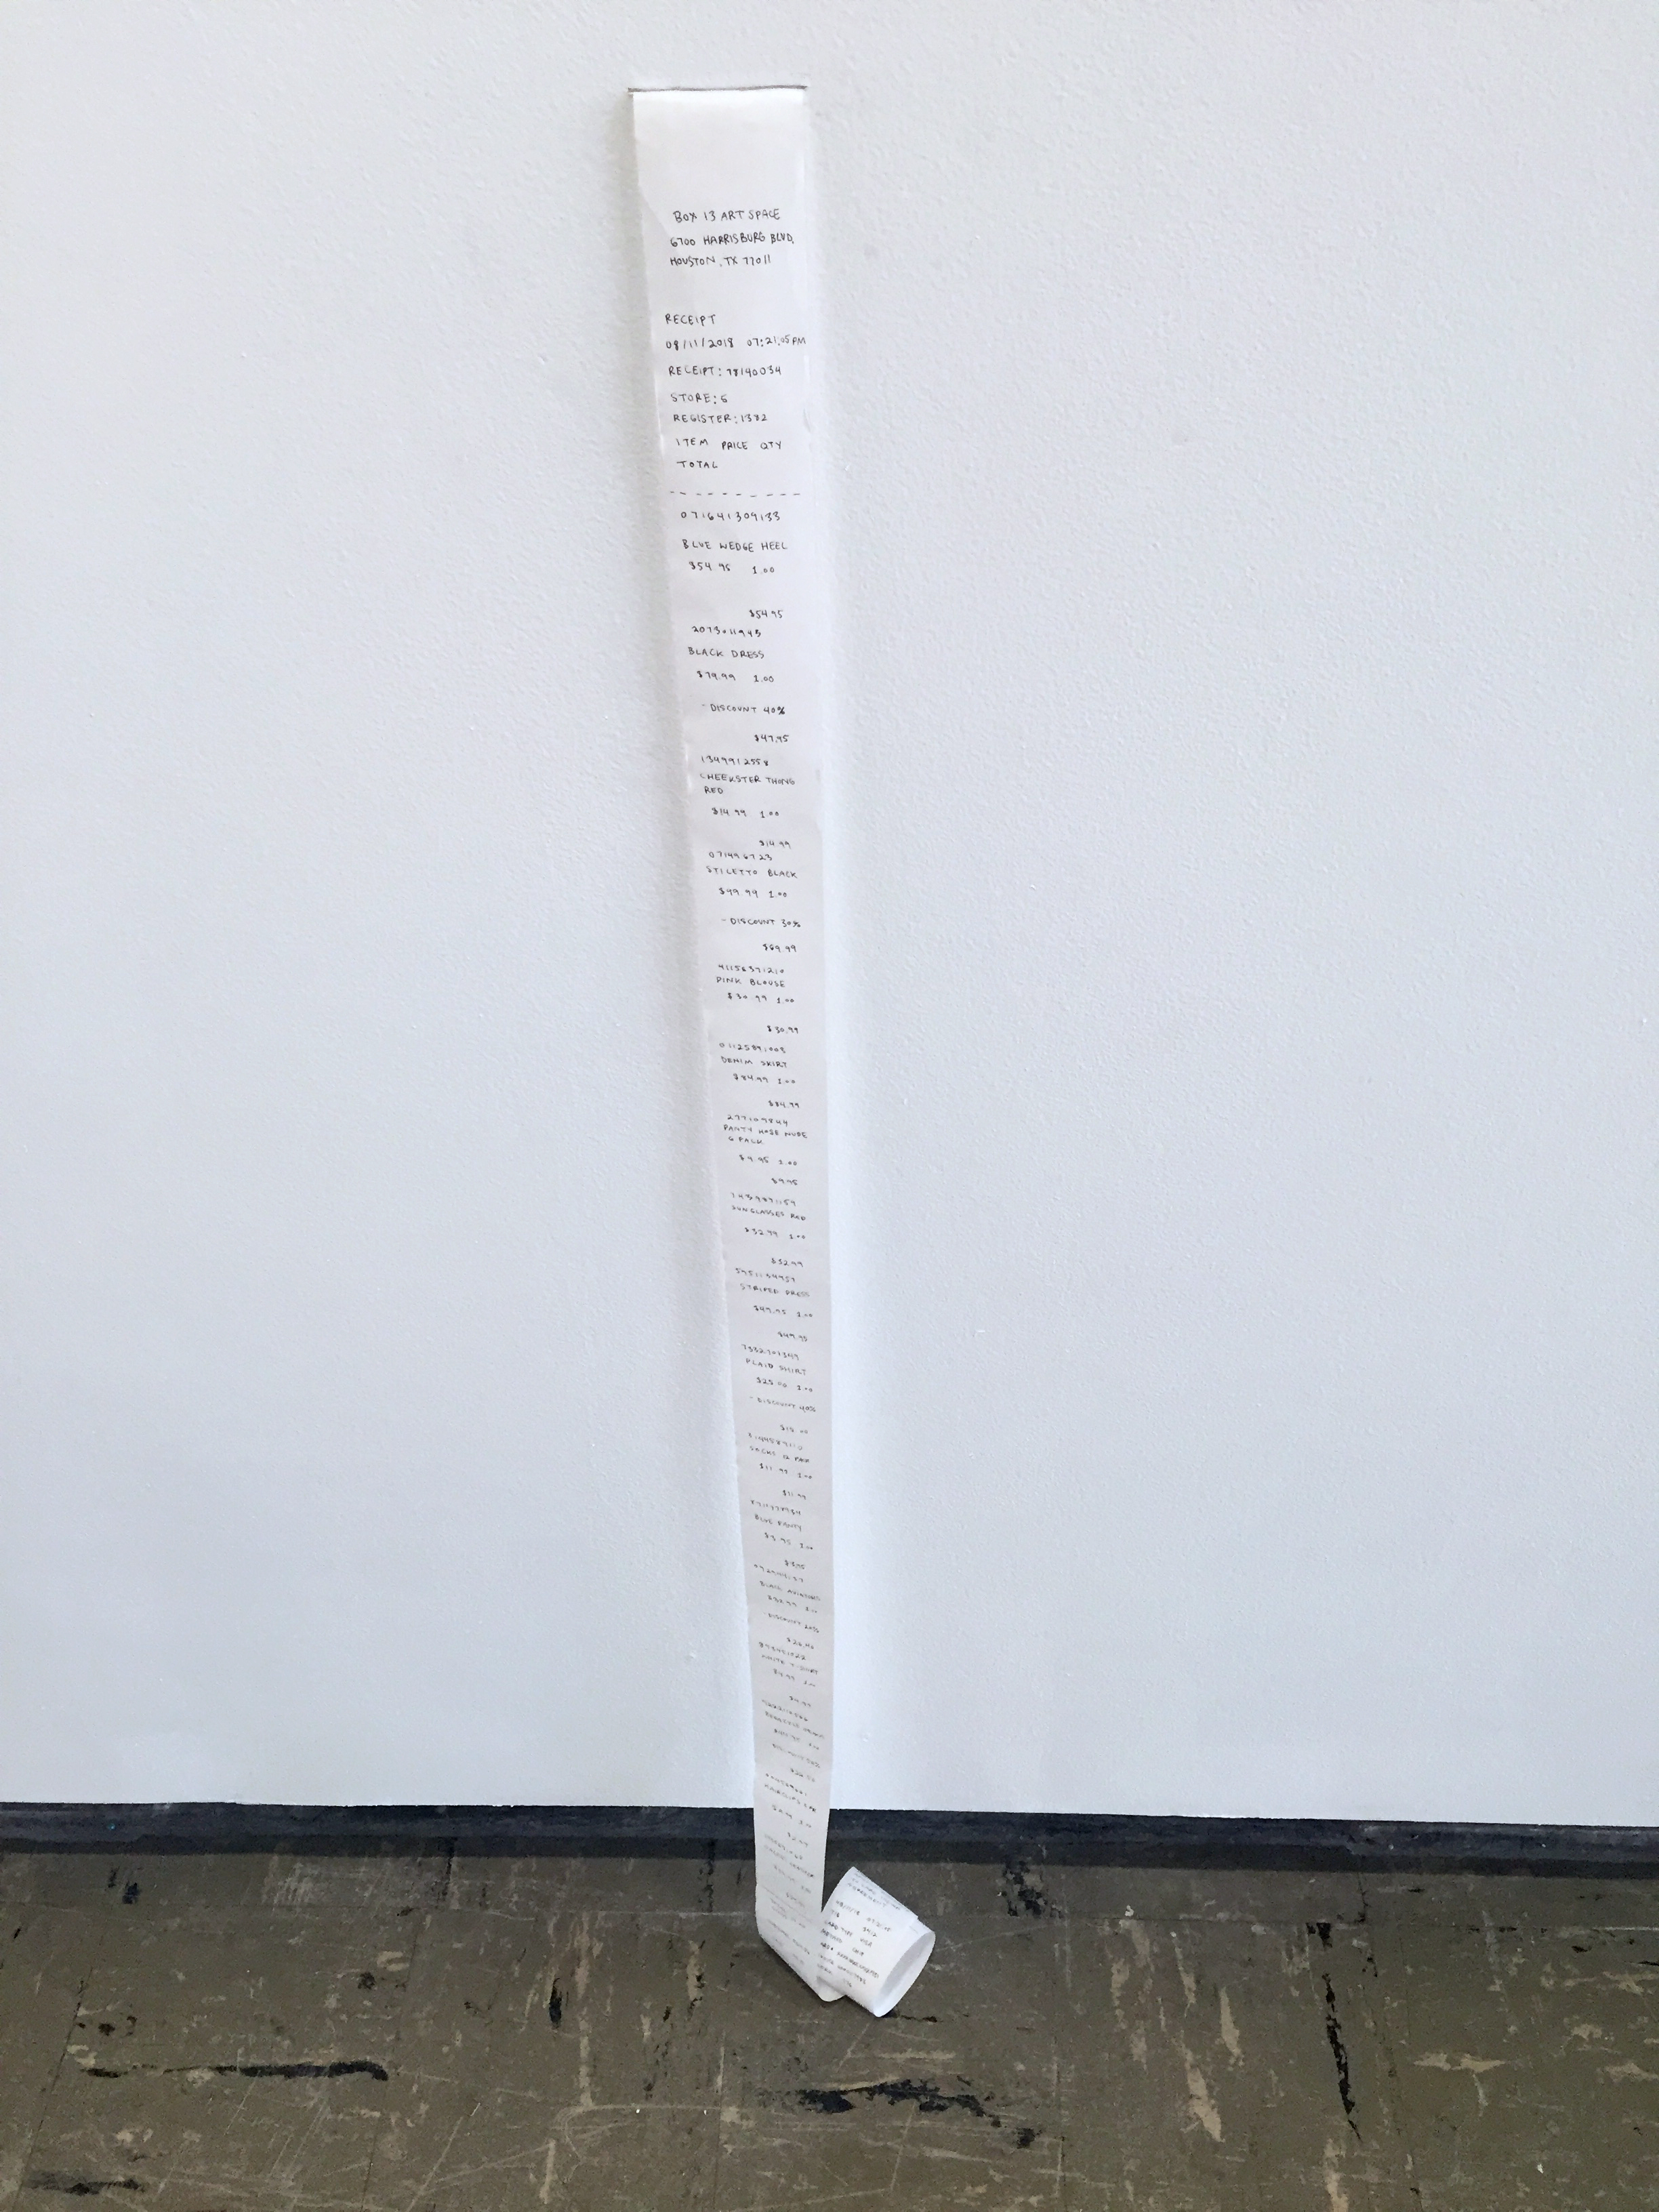   receipts , receipt paper, pen, 2018 